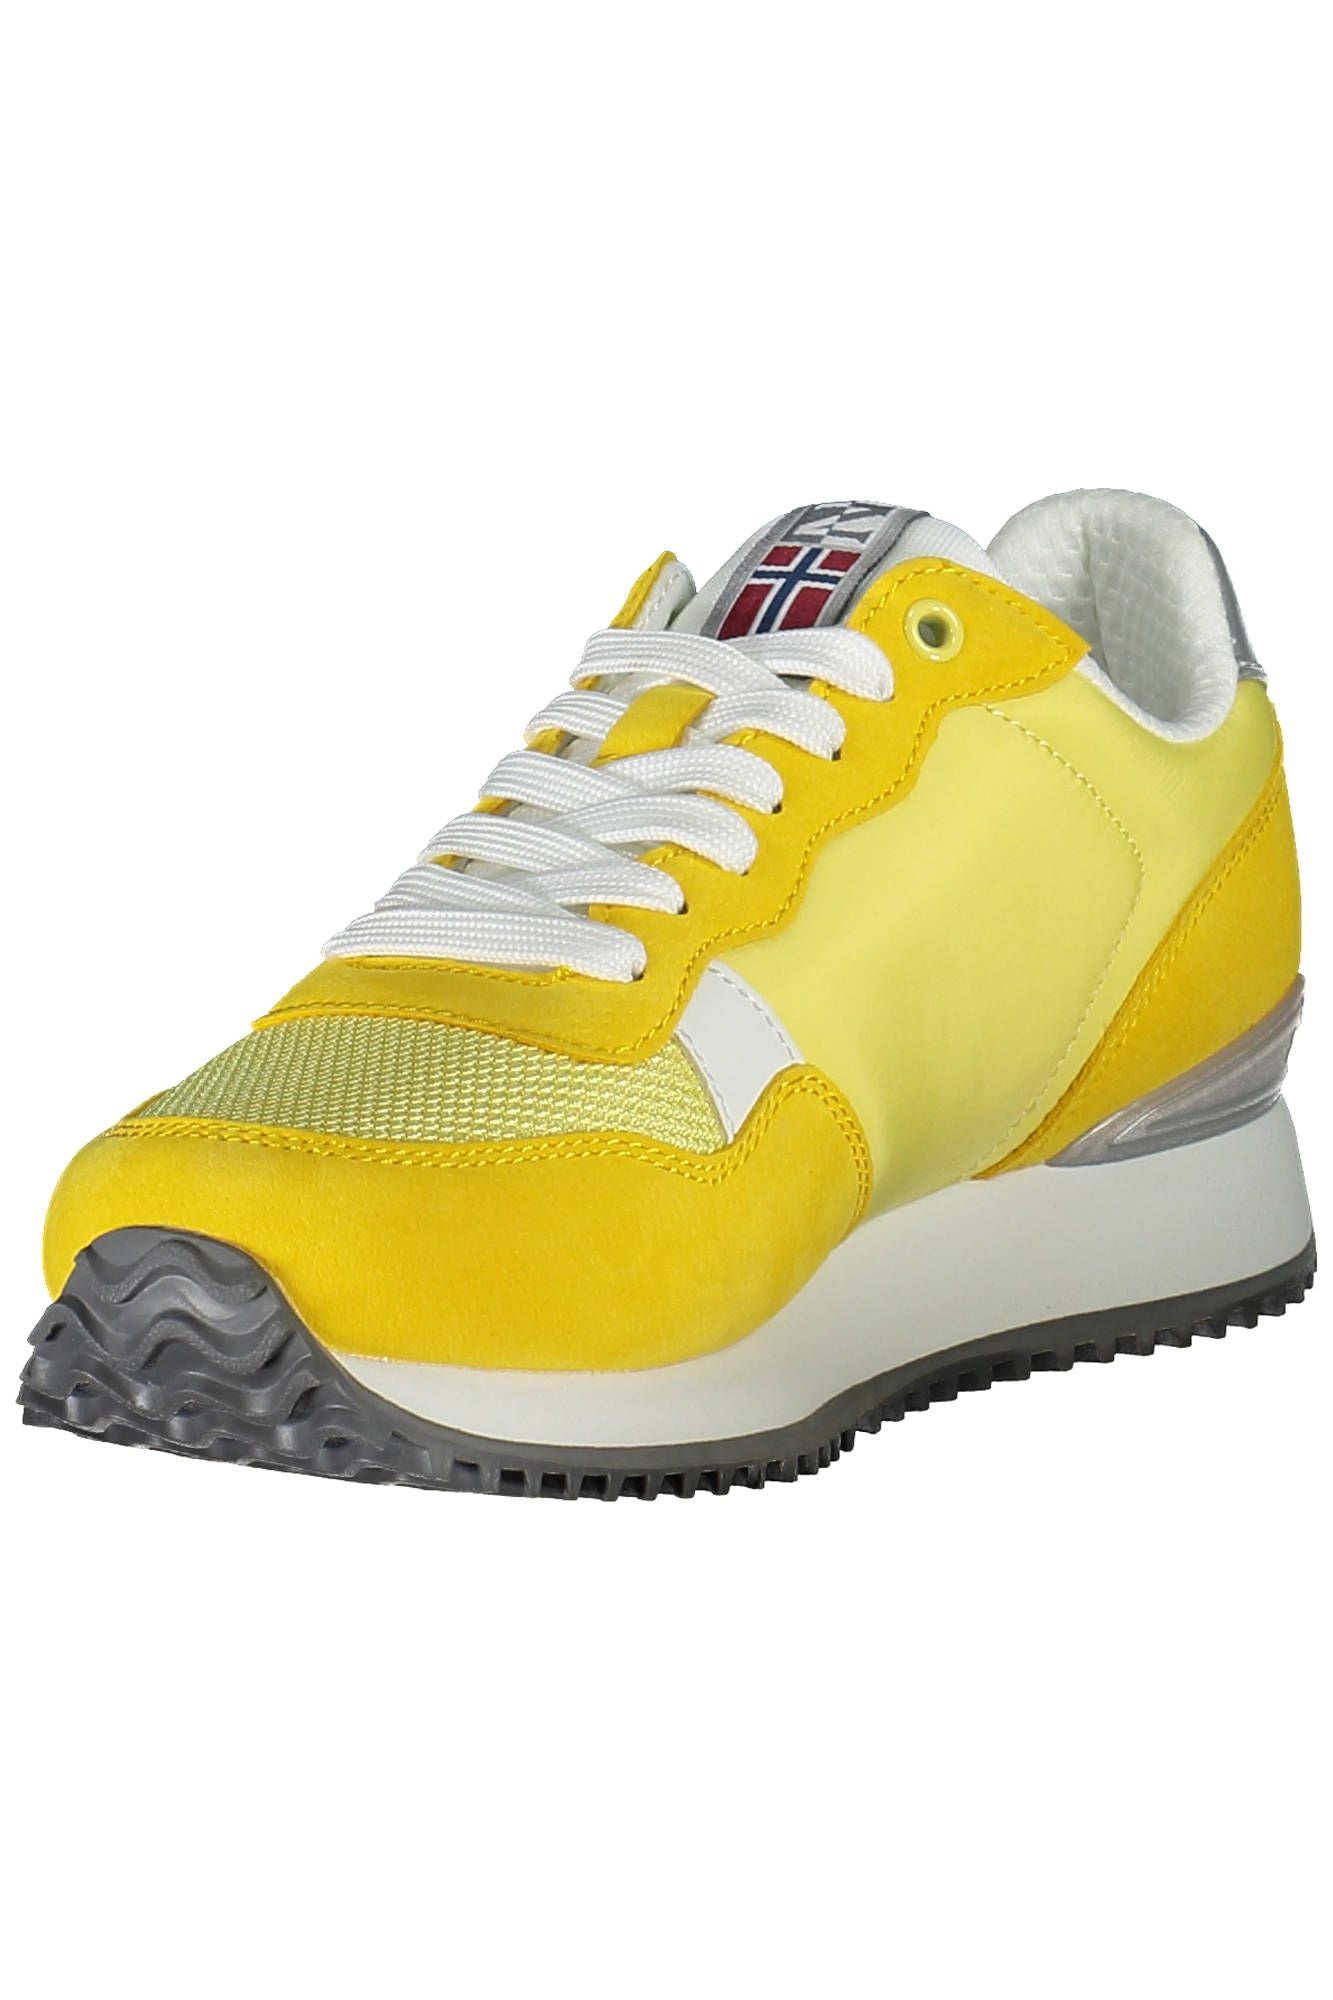 Napapijri Vibrant Yellow Lace-up Sneakers